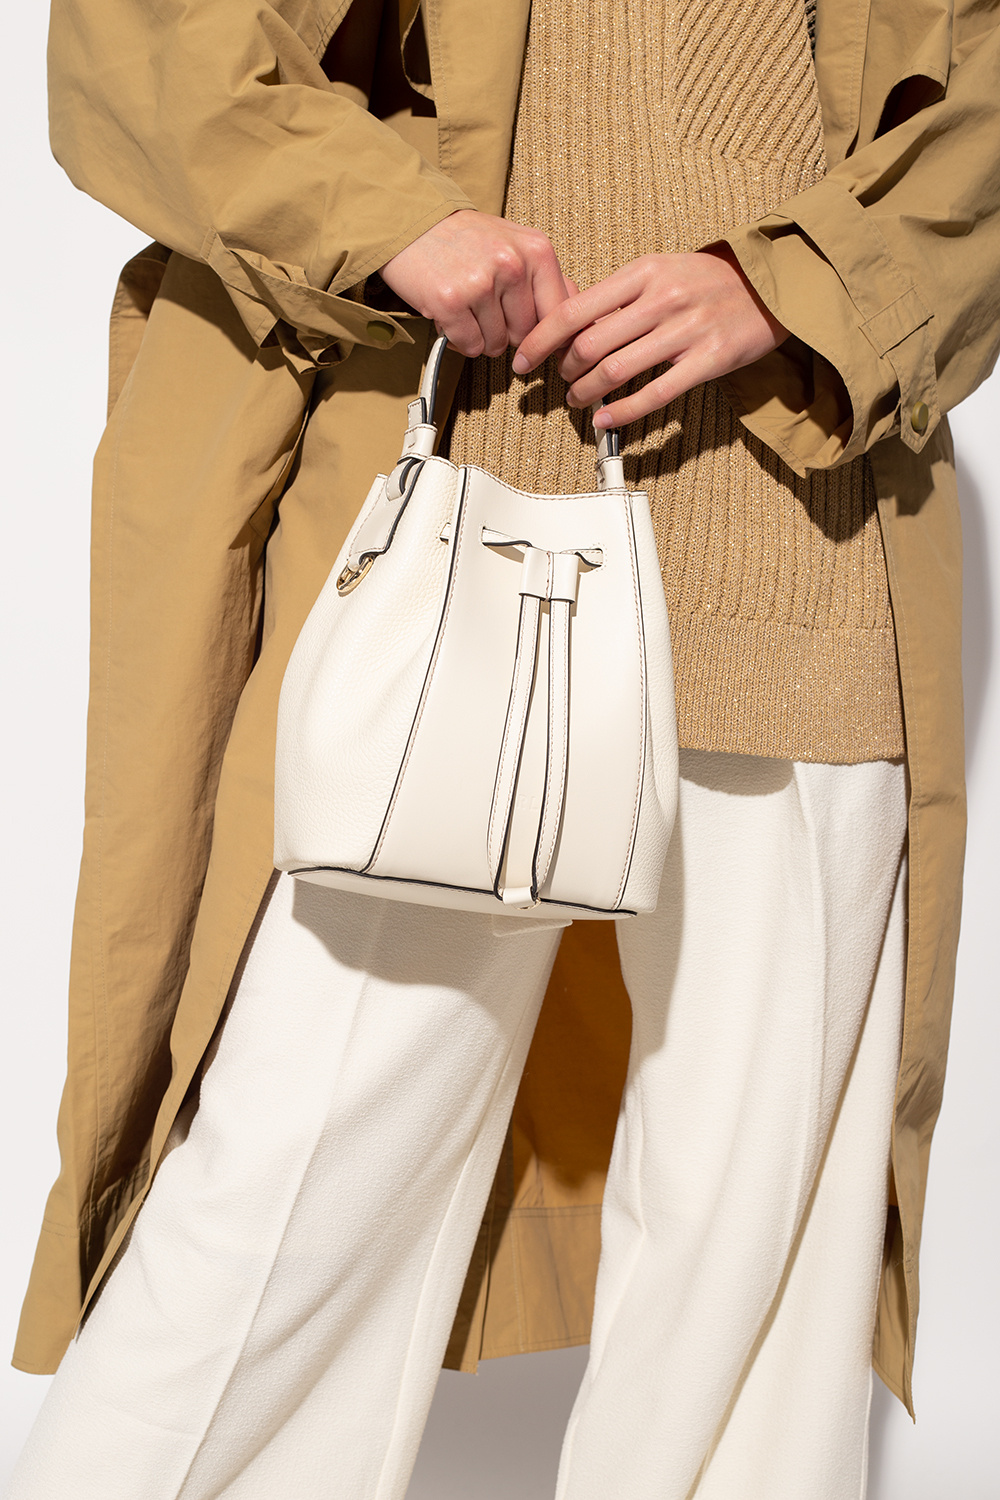 Miastella Mini' shoulder bag Furla - Peony Grain Leather Bucket